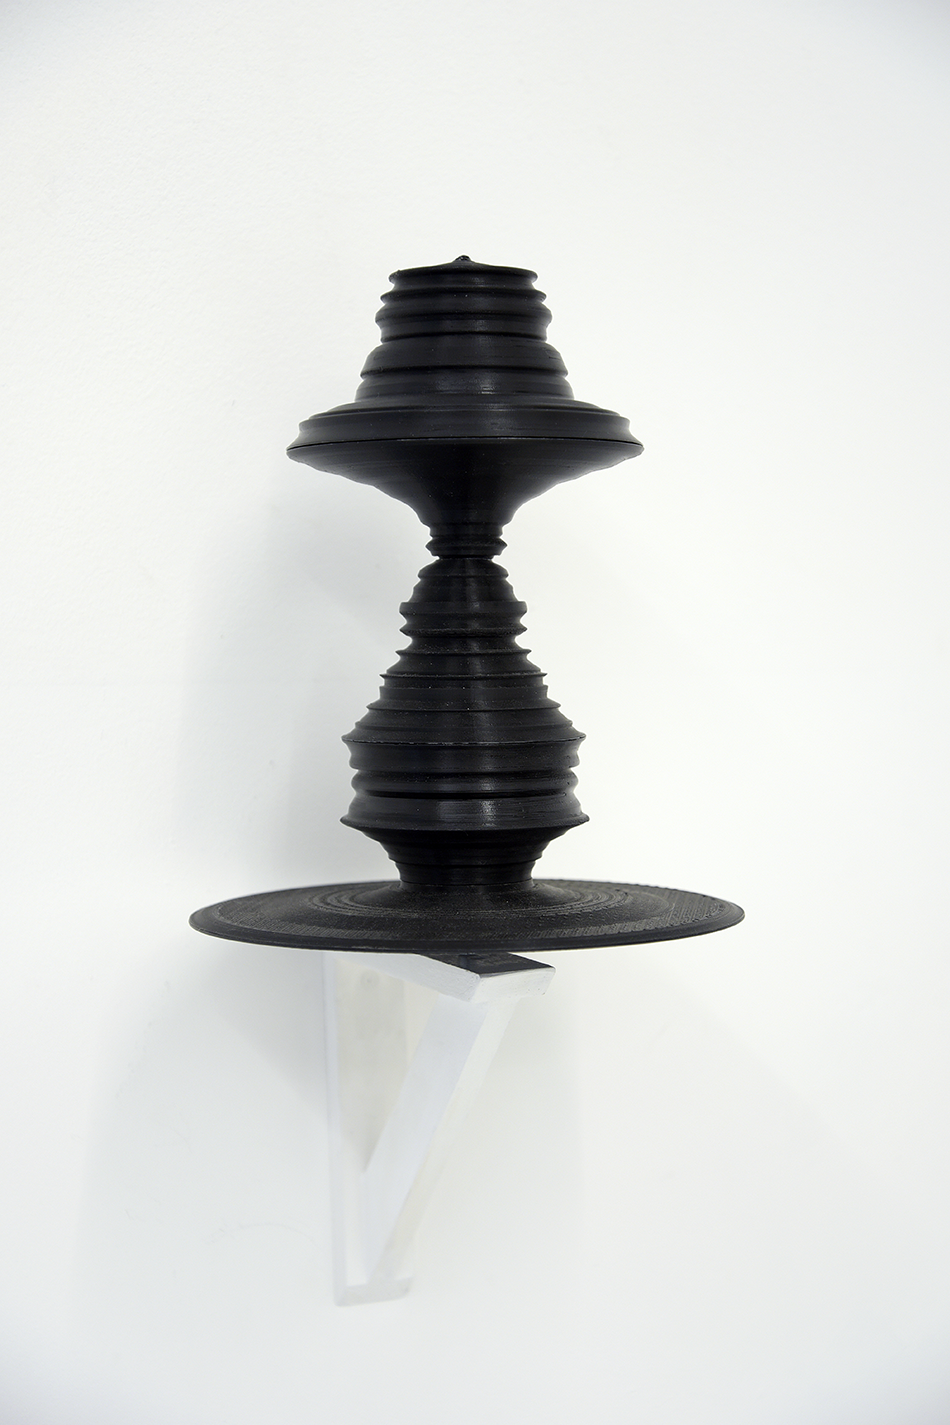 'Prayer wheel', impression 3D en résine, support en bois, 2019.